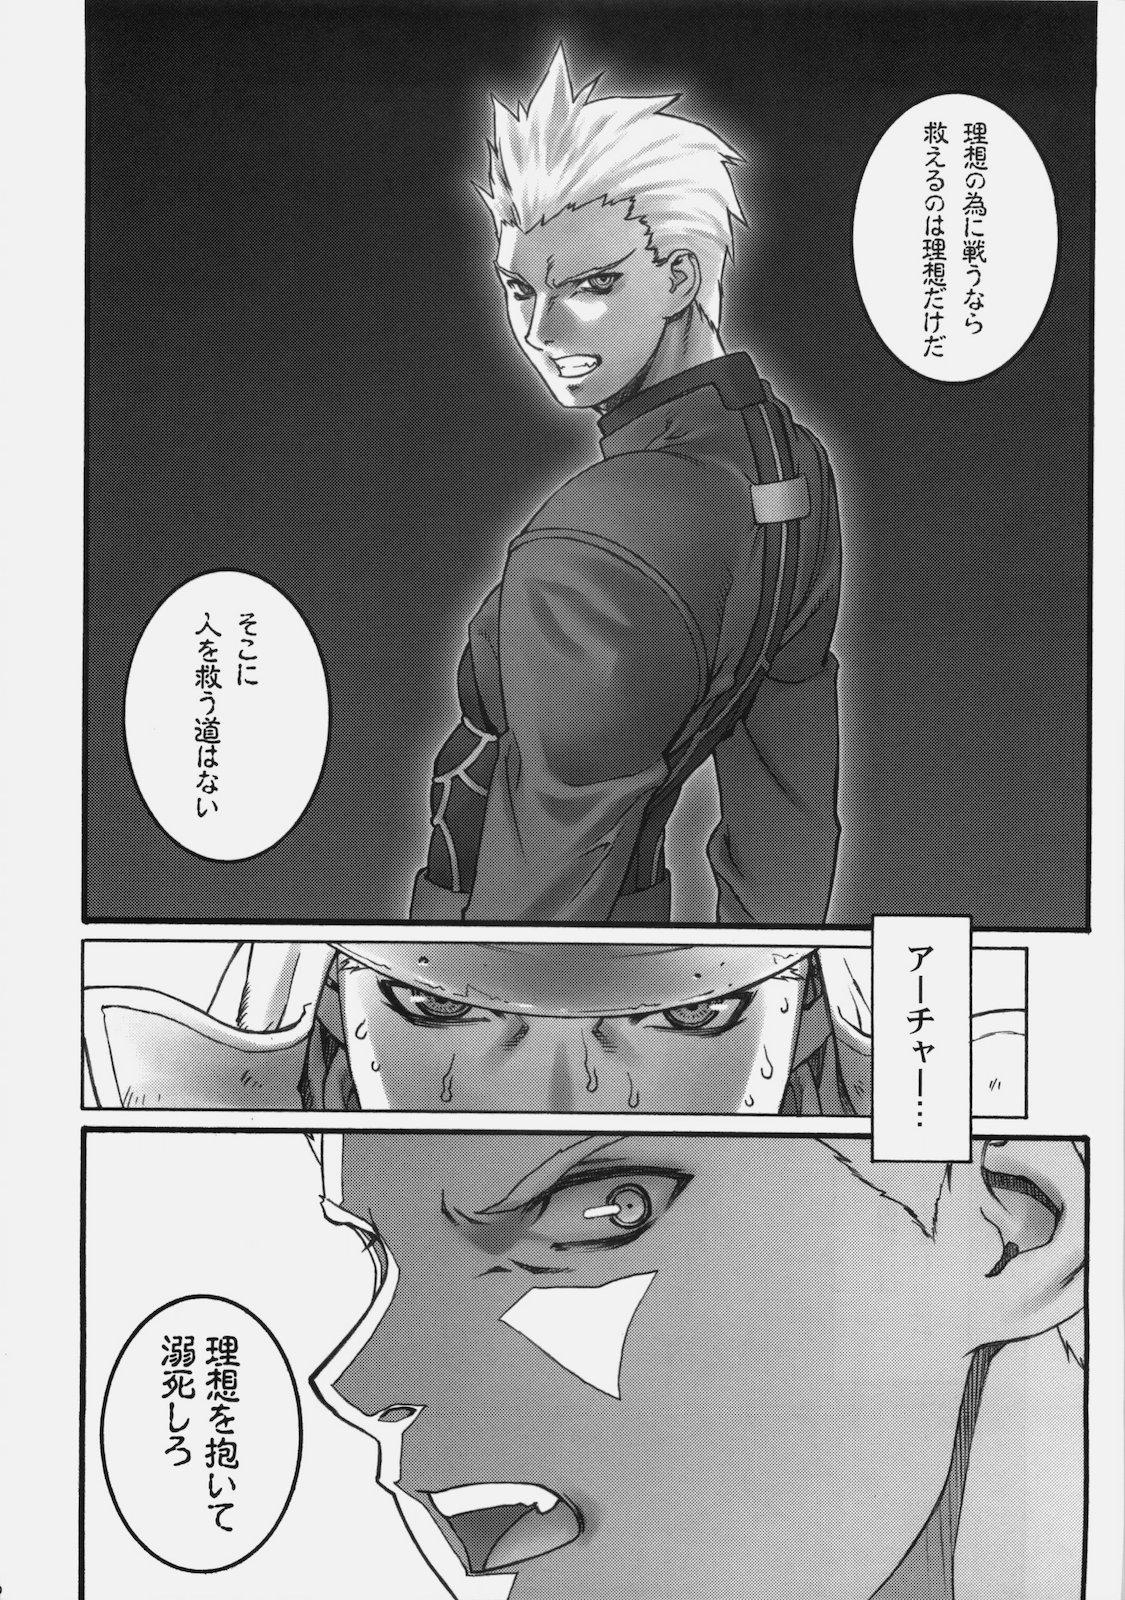 Nerd Theater of Fate - Fate stay night Chudai - Page 11